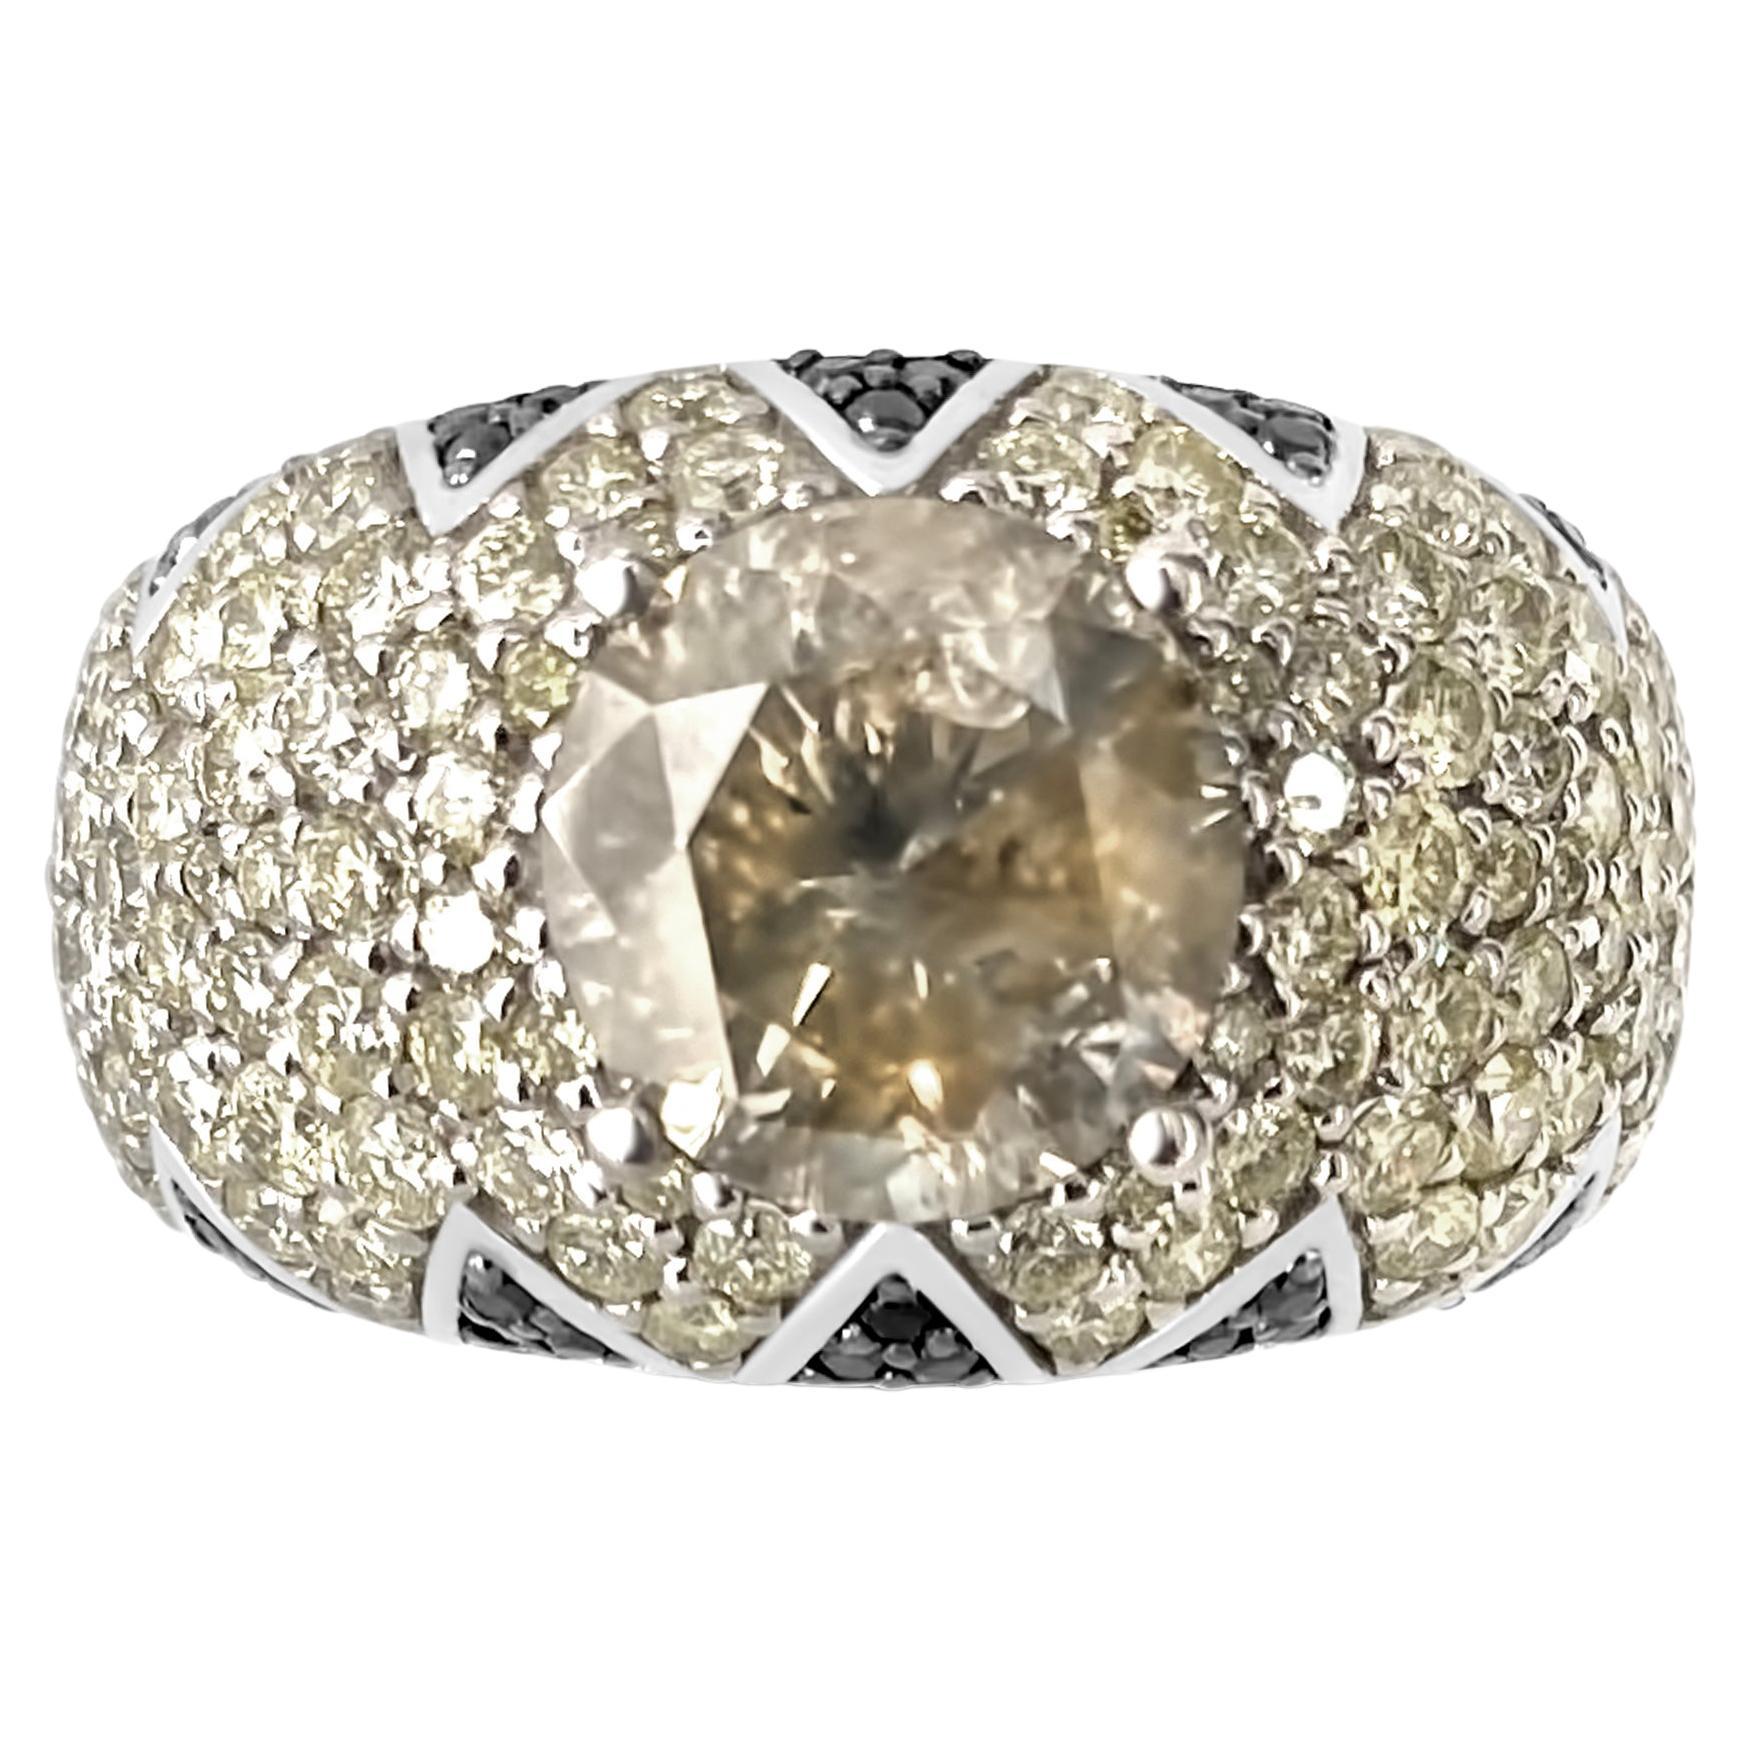 Lotus Bombe ring with 2.53 ct champagne diamond solitaire & black diamond petals